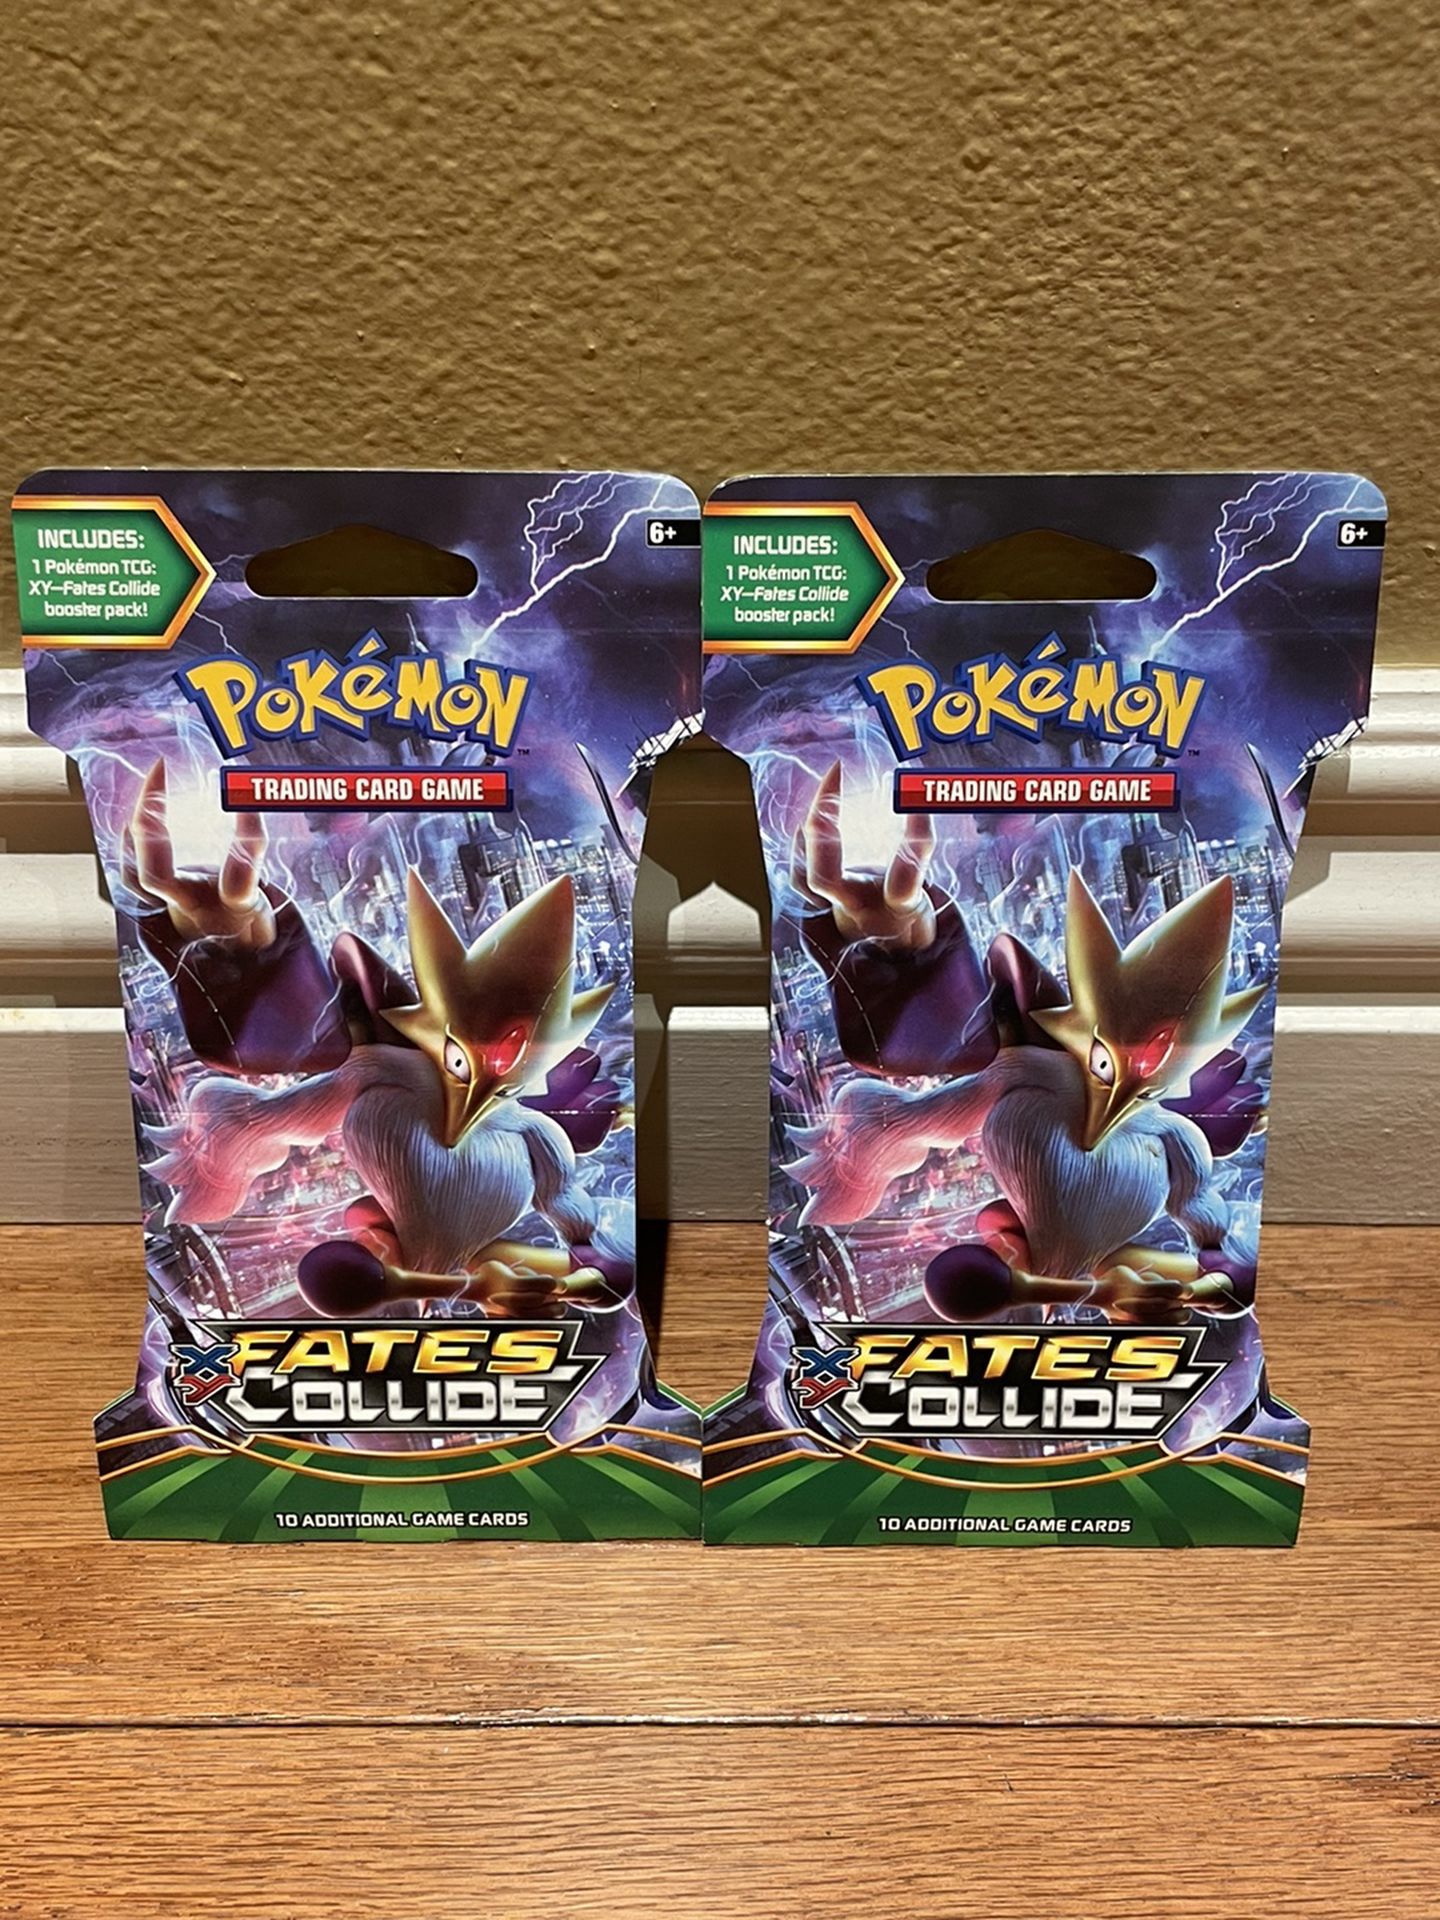 2 Pokémon XY Fates Collide Sleeved Packs